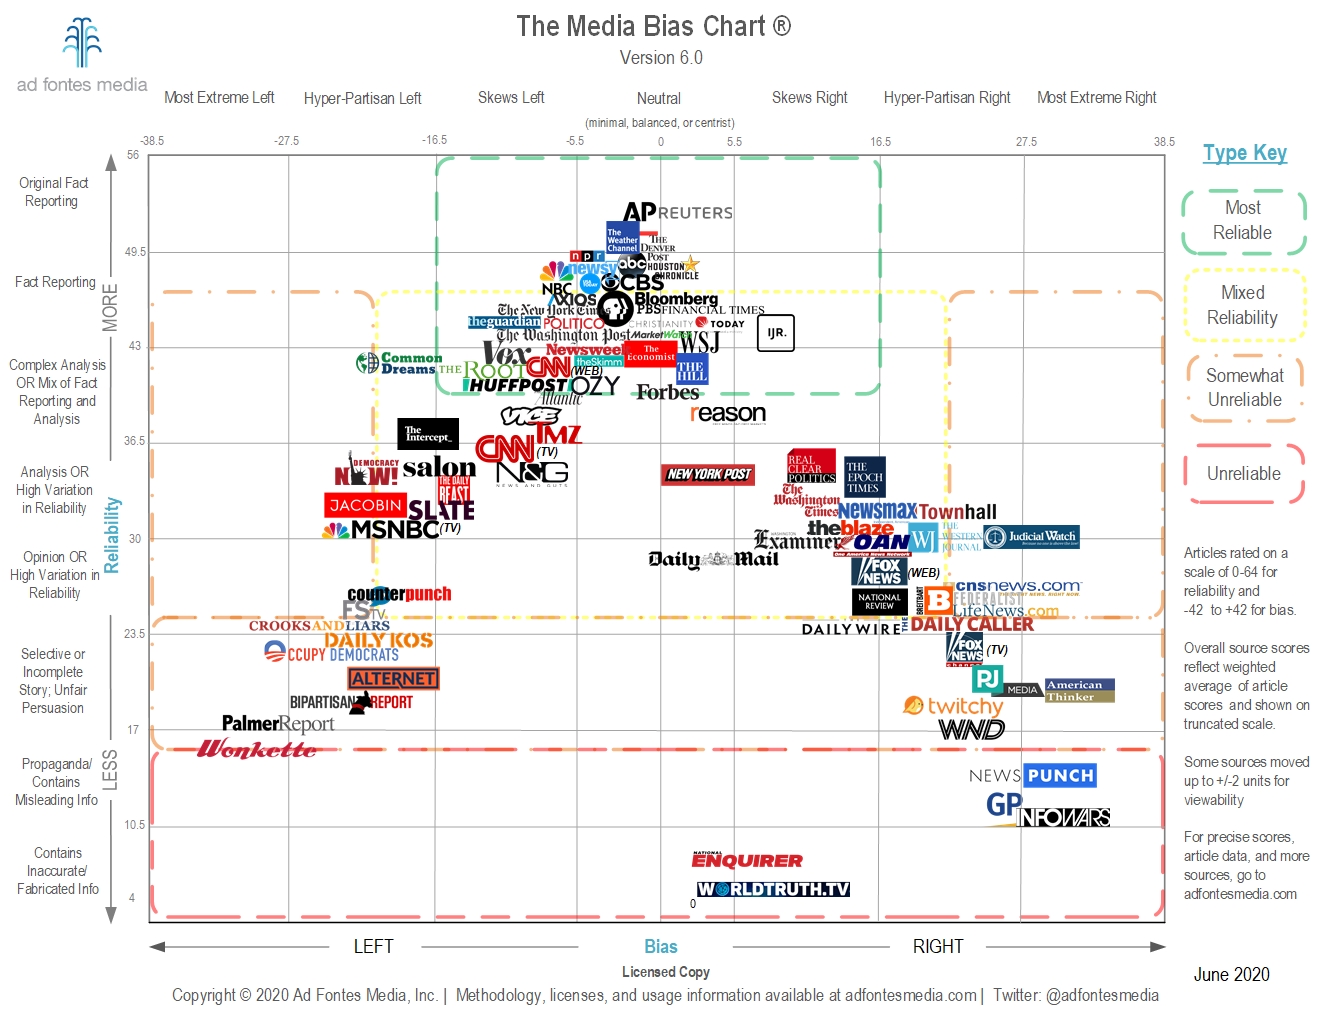 Figure 21.2: The Media Bias Chart